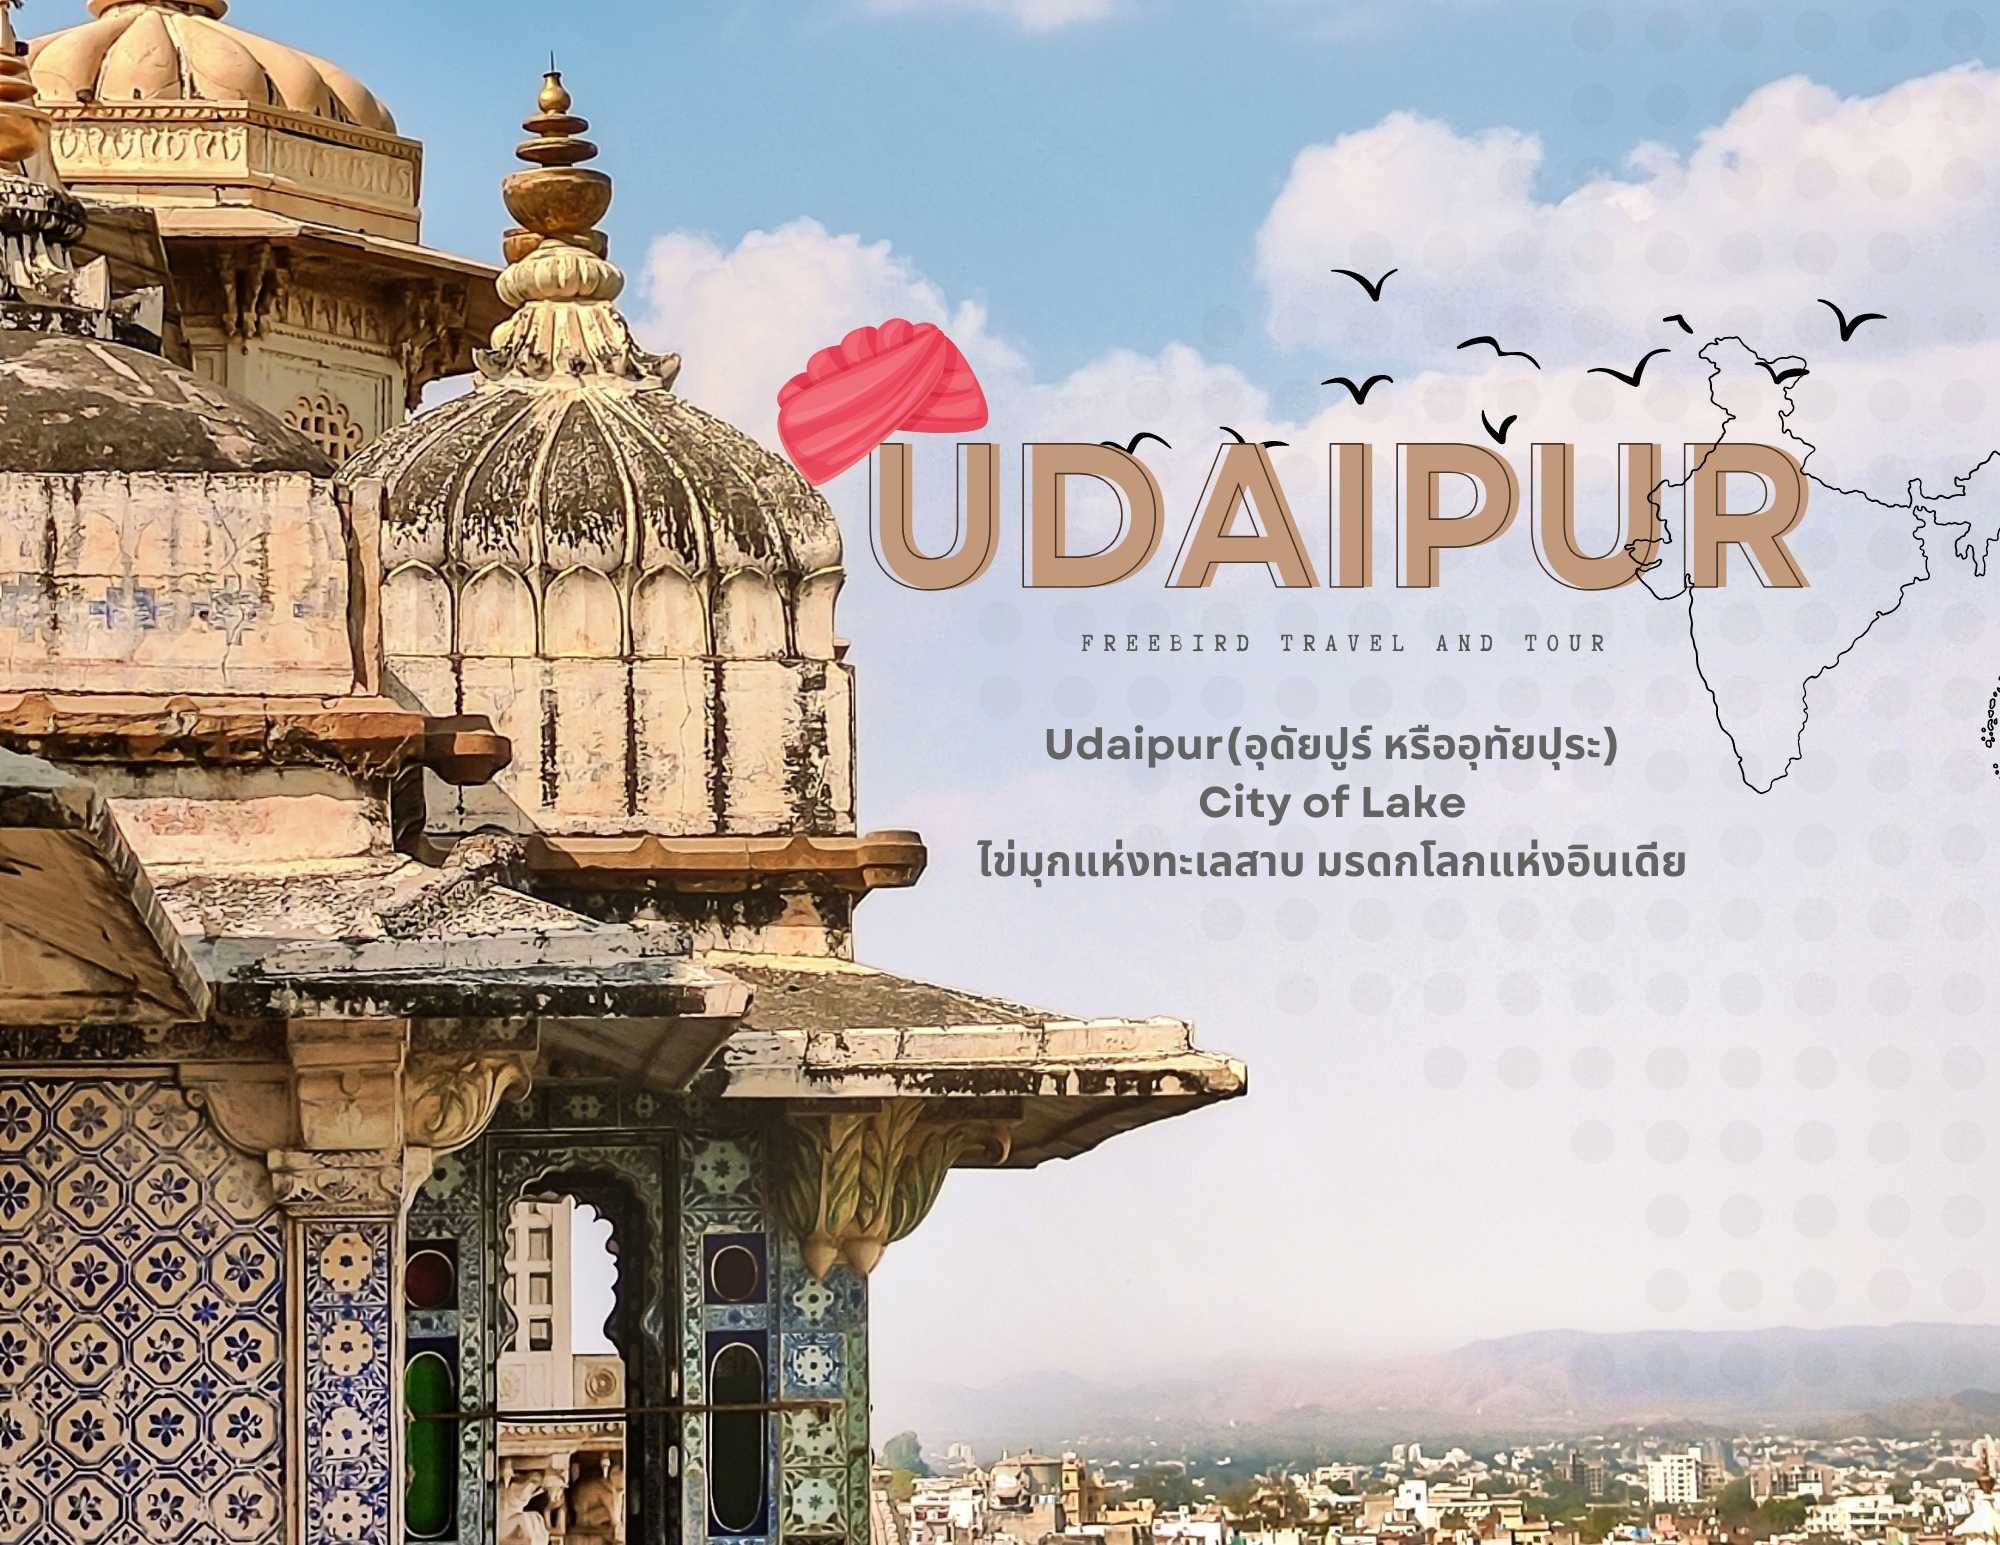 udaipur-india-freebirdtour